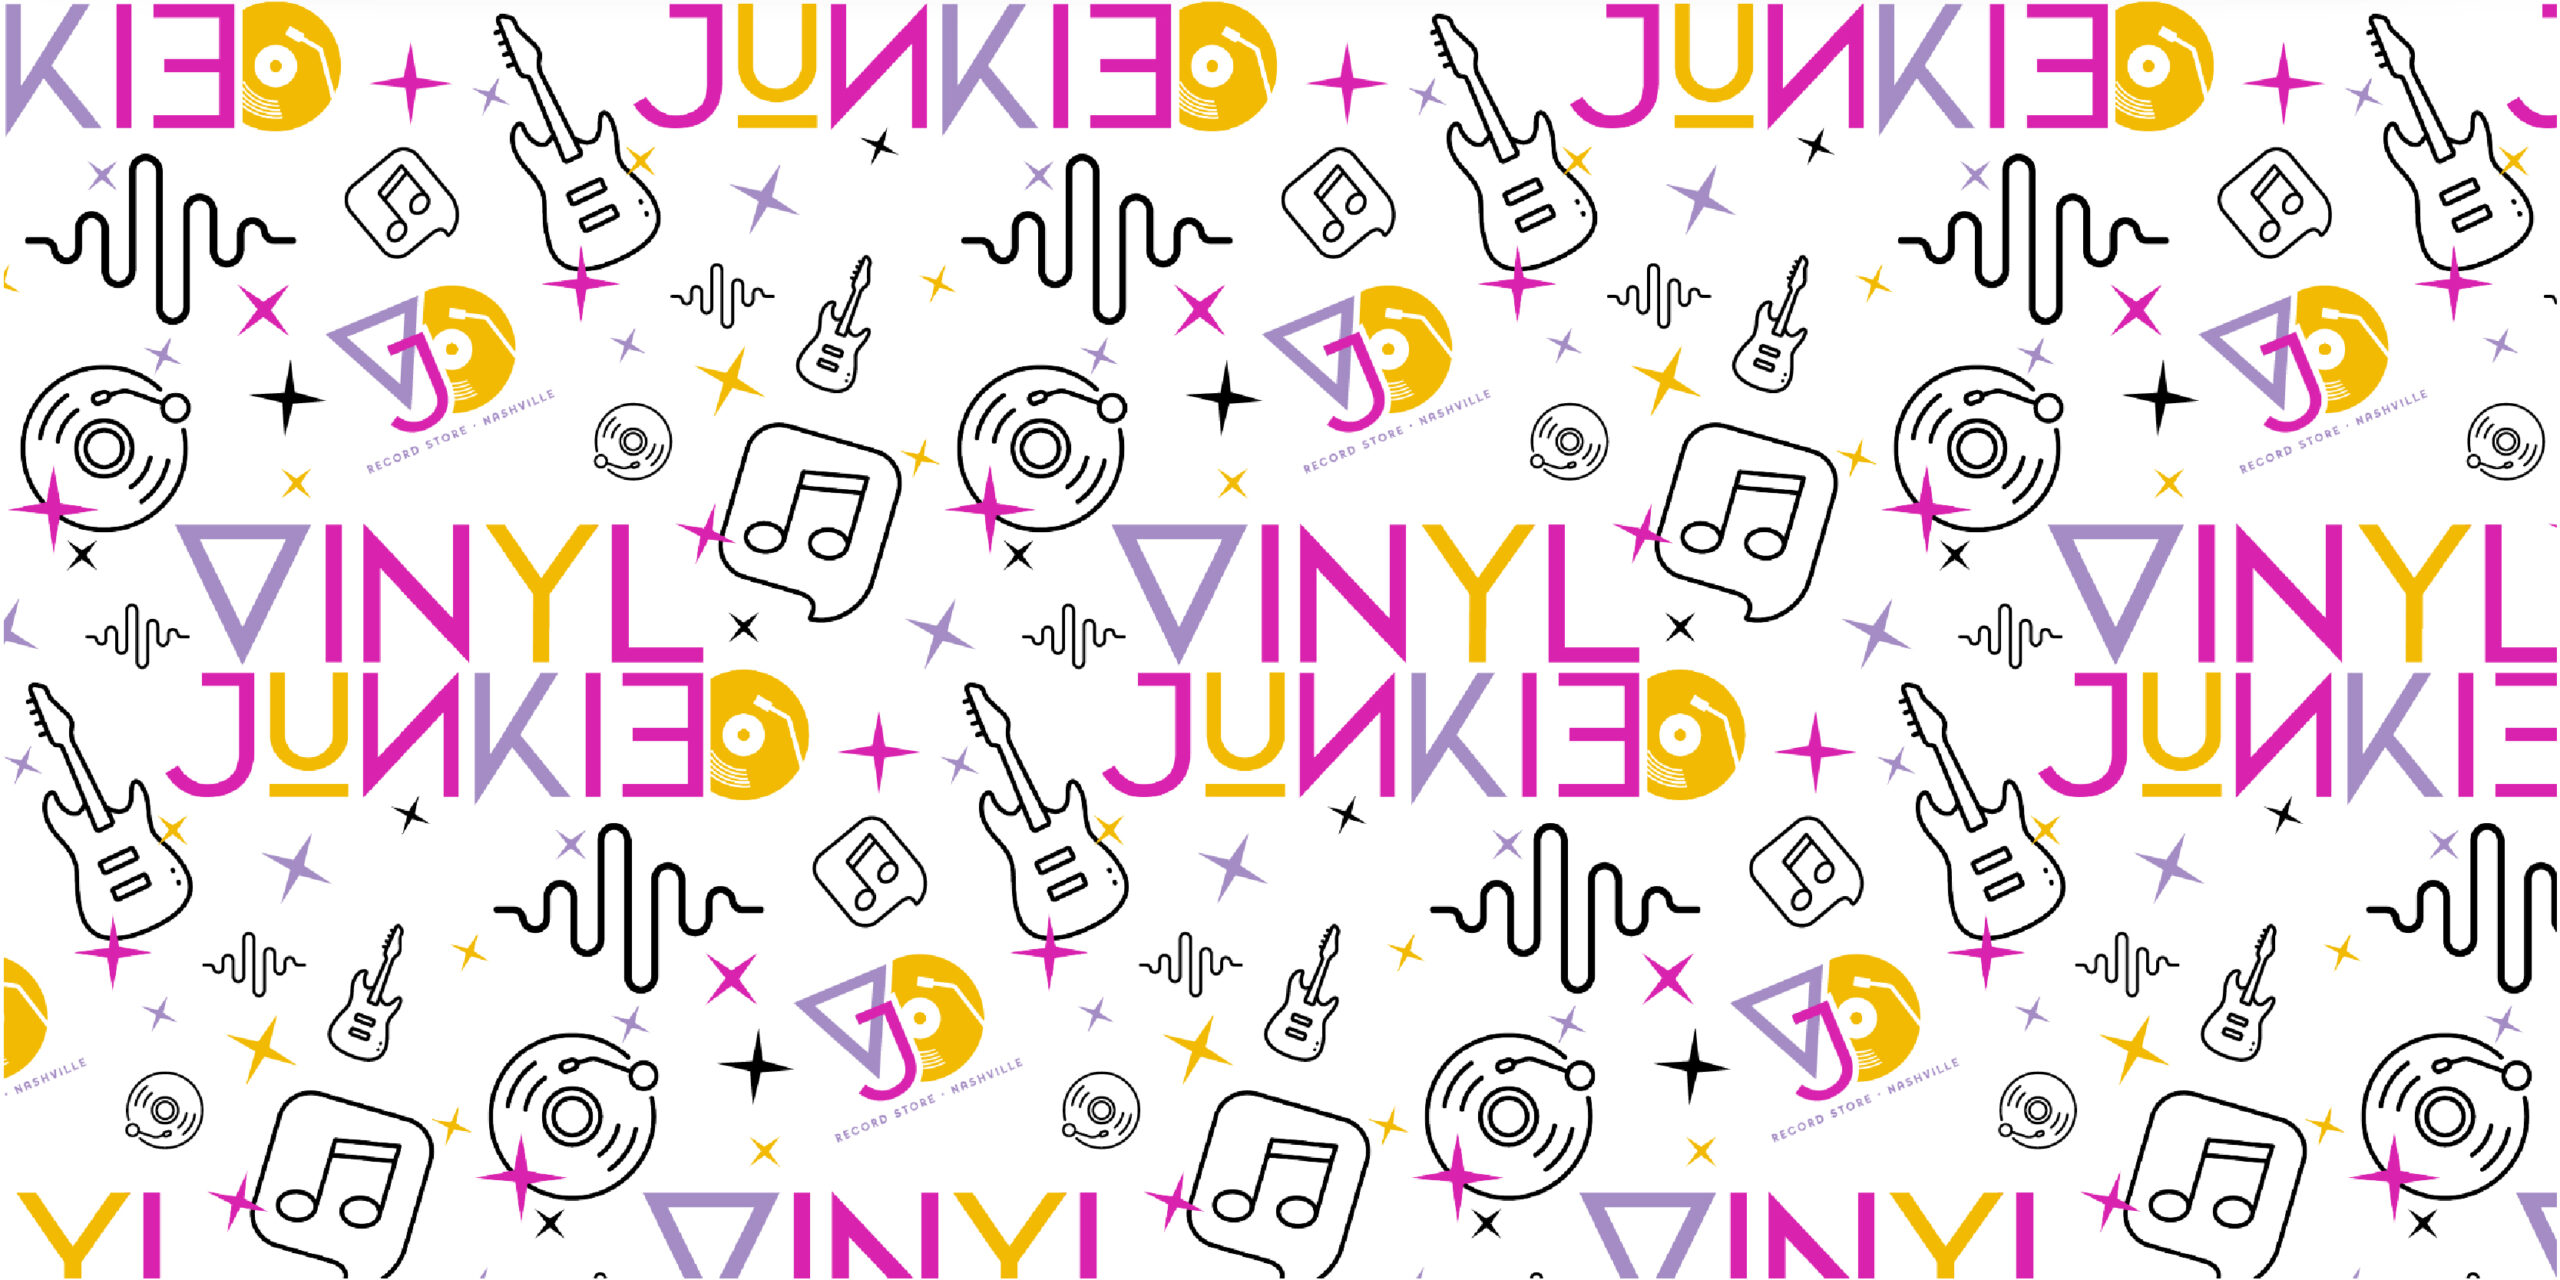 The Vinyl Junkie Brand Pattern